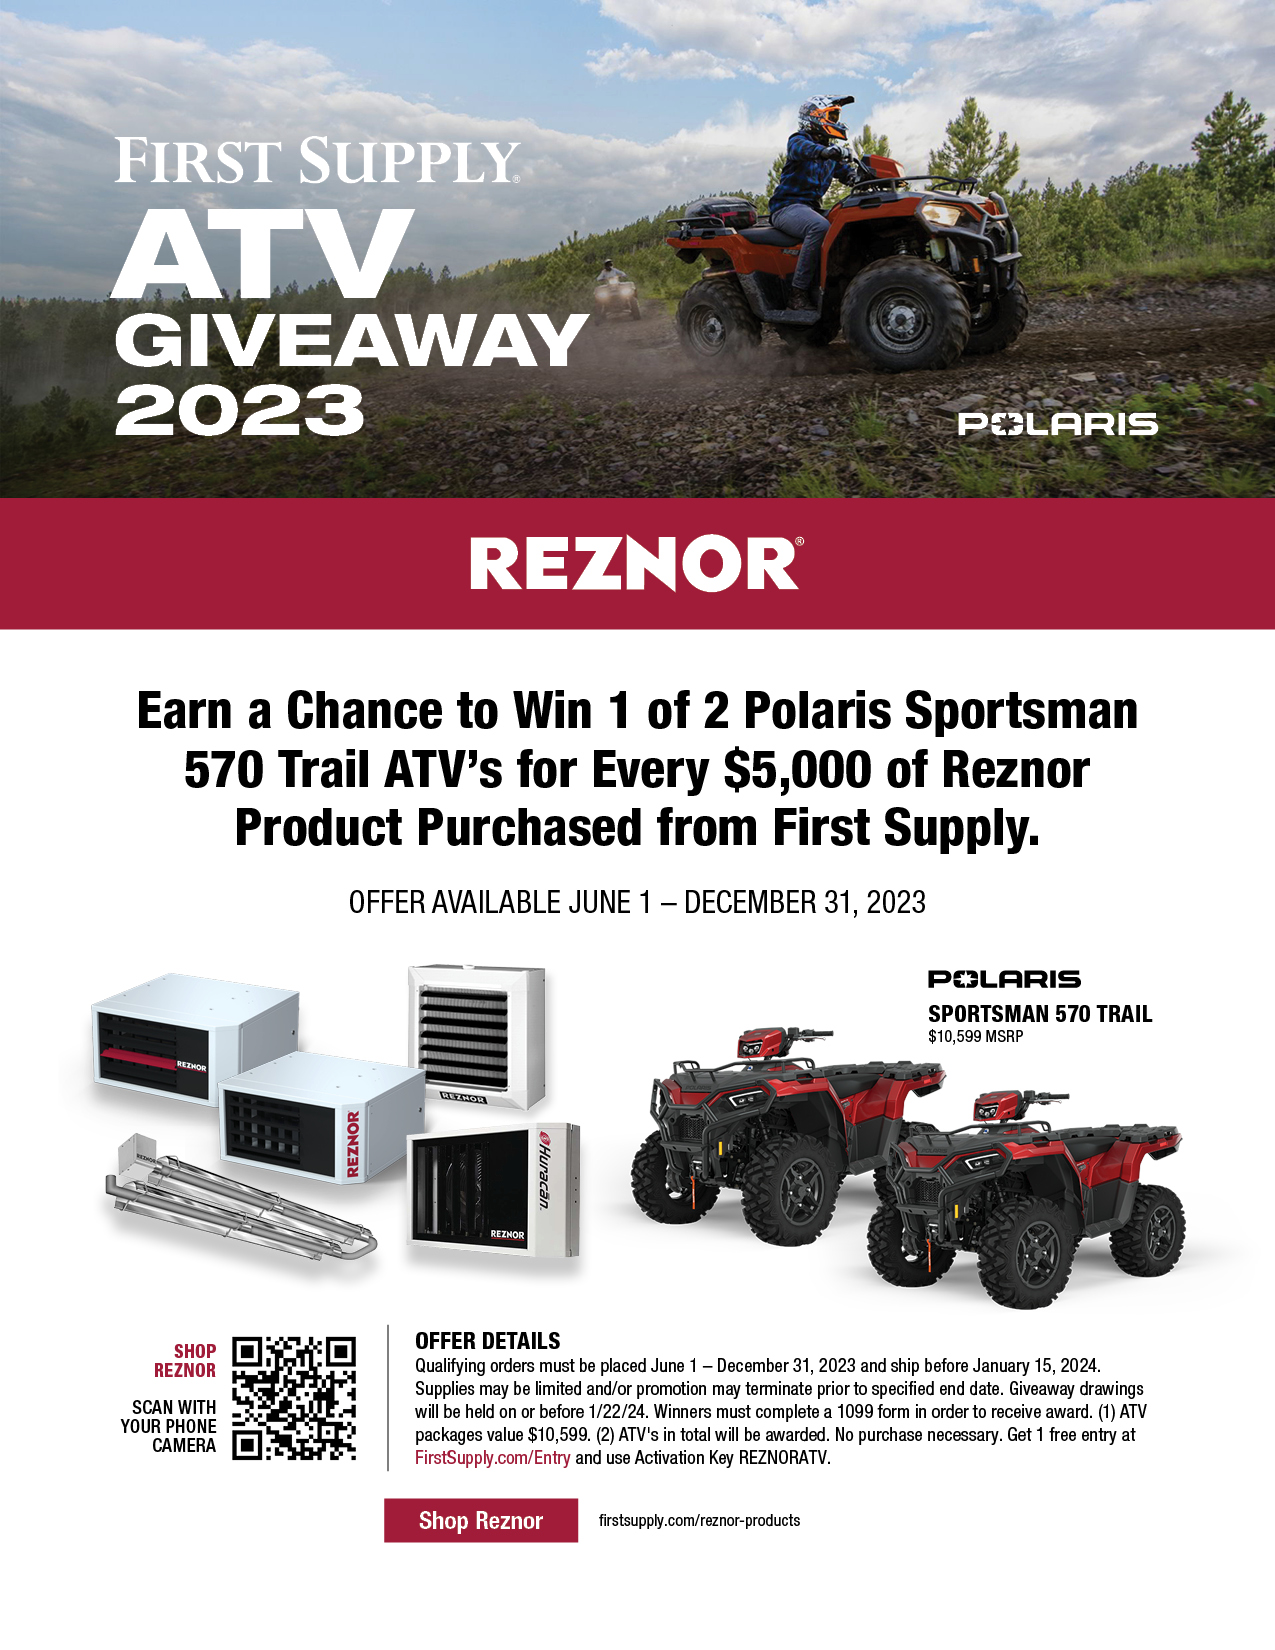 Reznor ATV Giveaway 2023